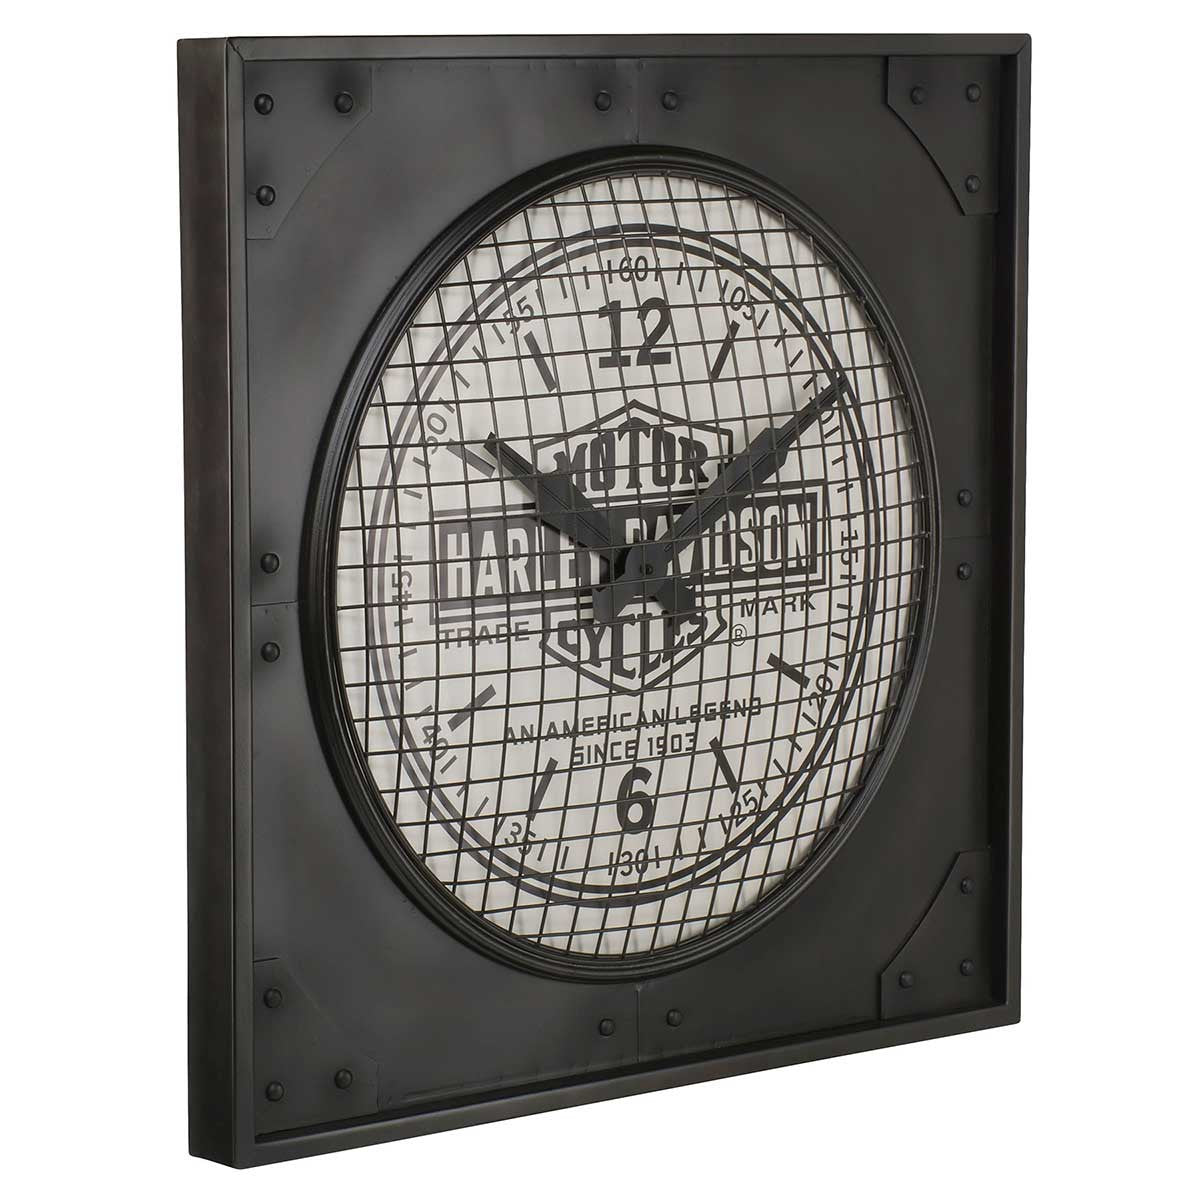 Harley Davidson Industrial Metal Clock